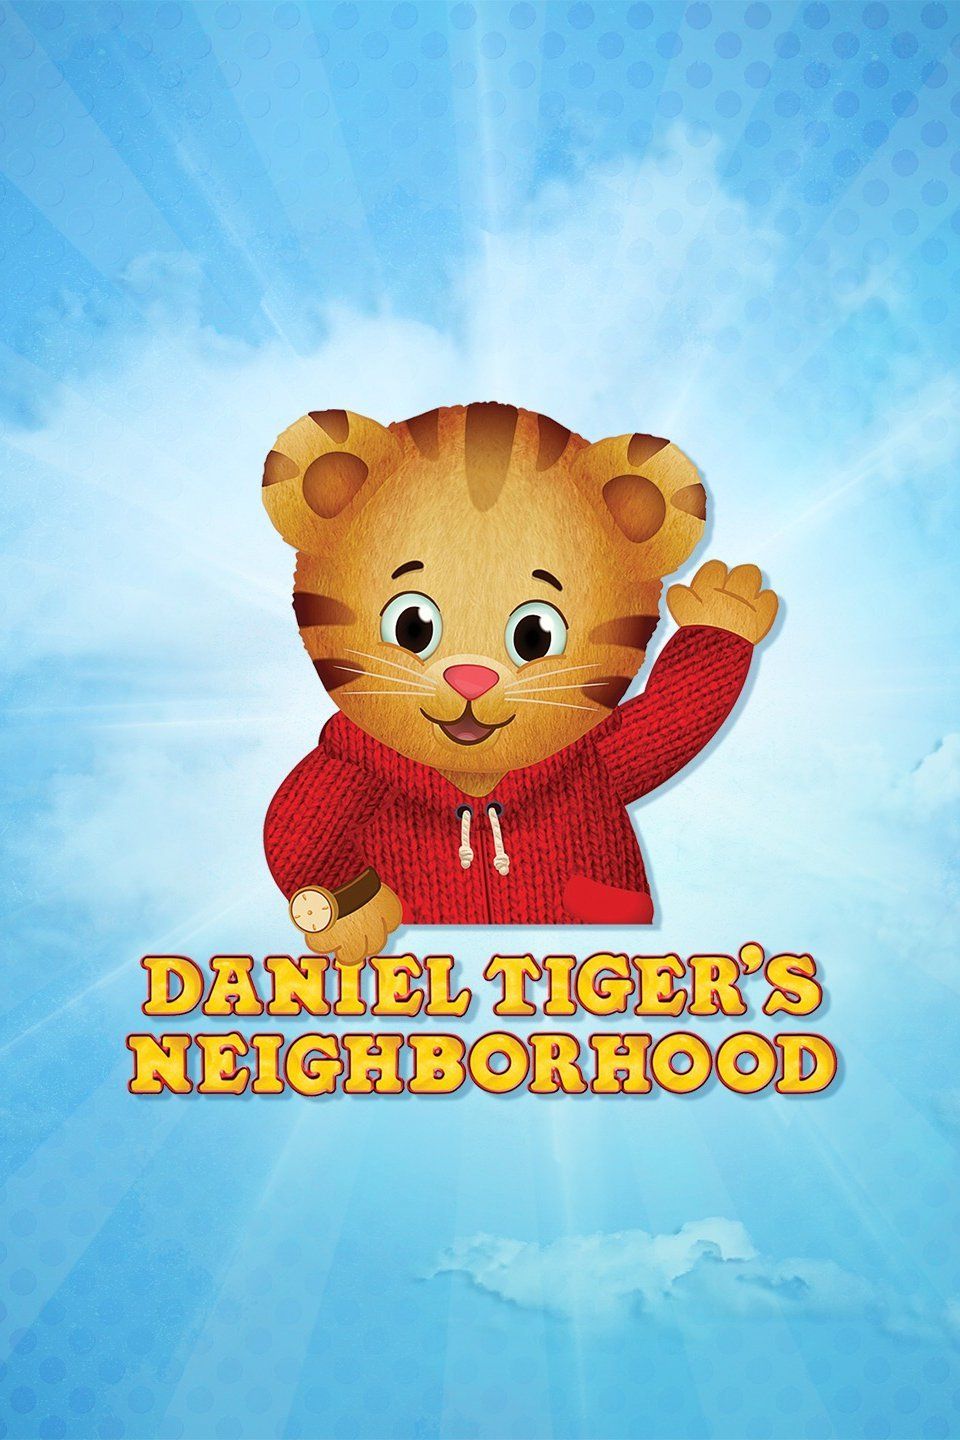 Daniel Tiger's Neighborhood (TV Series 2012– )